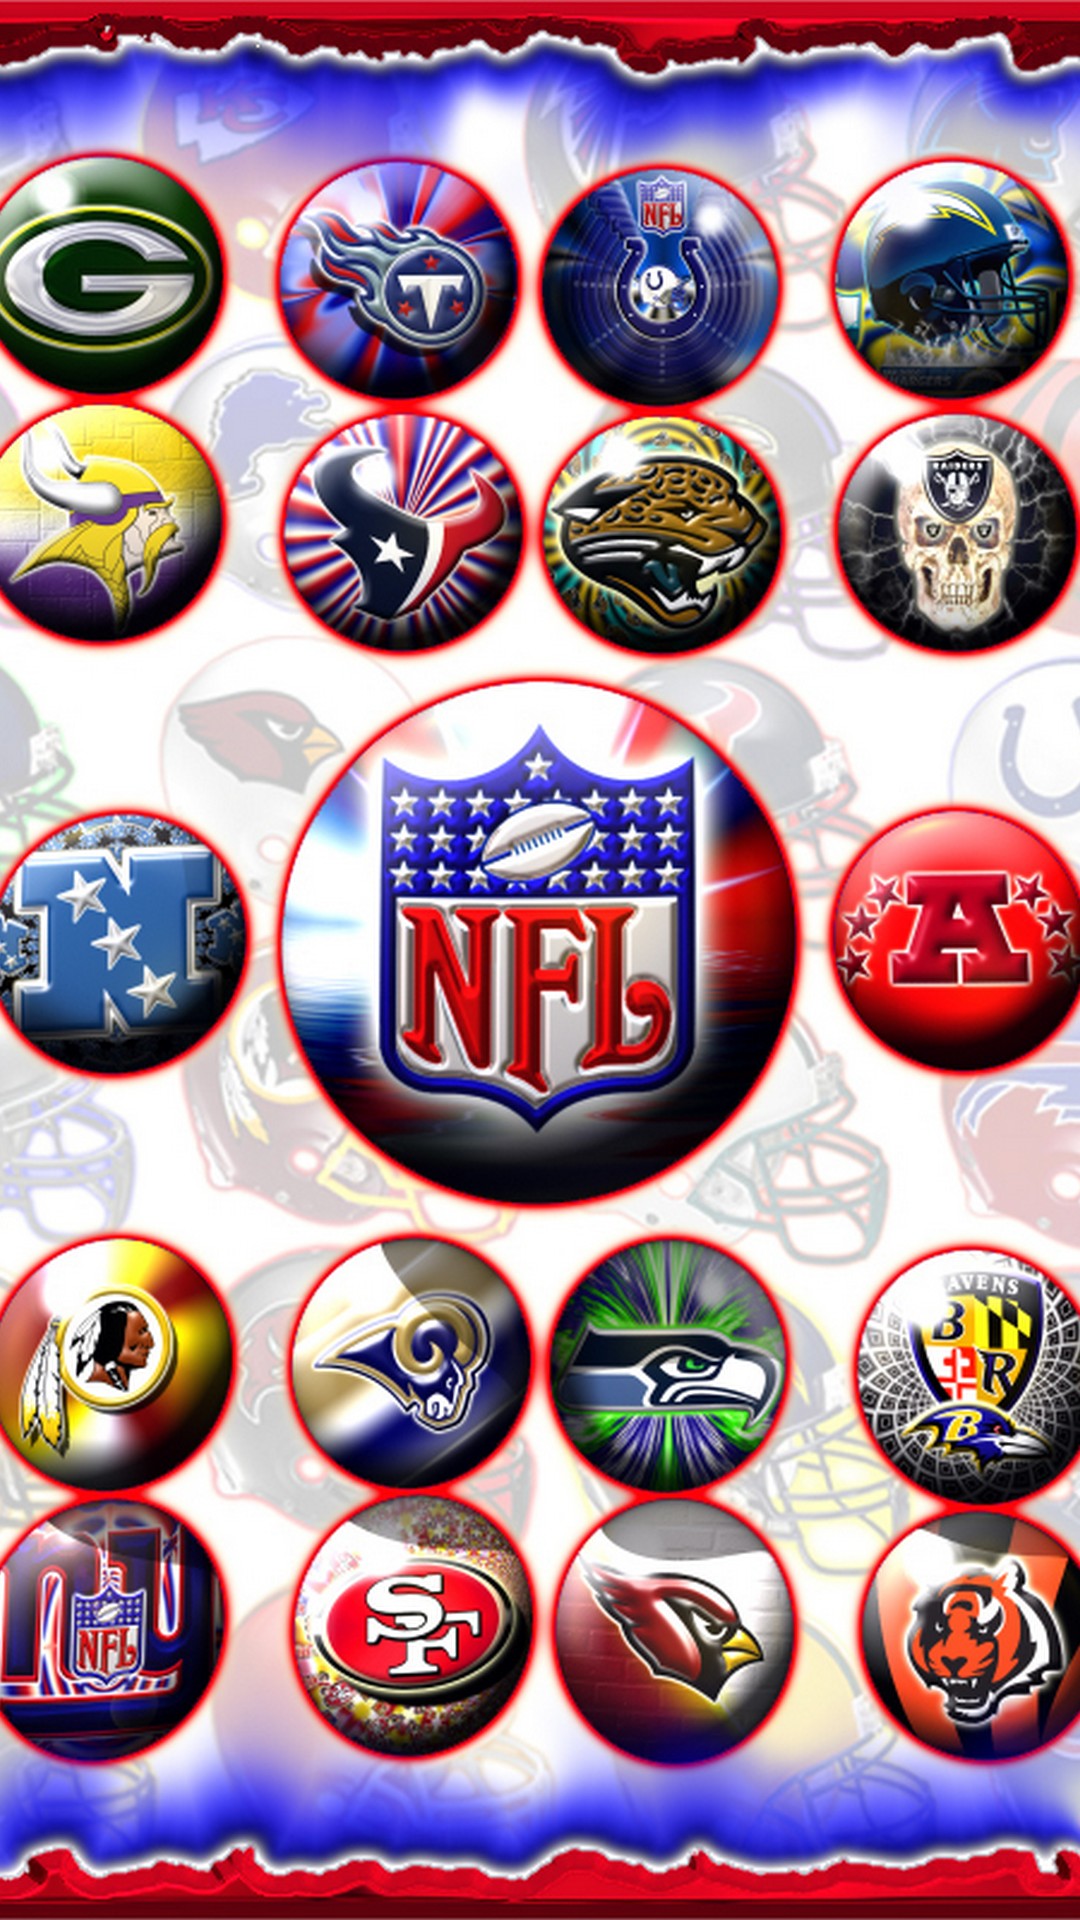 NFL iPhone Wallpaper NFL Football Wallpaper